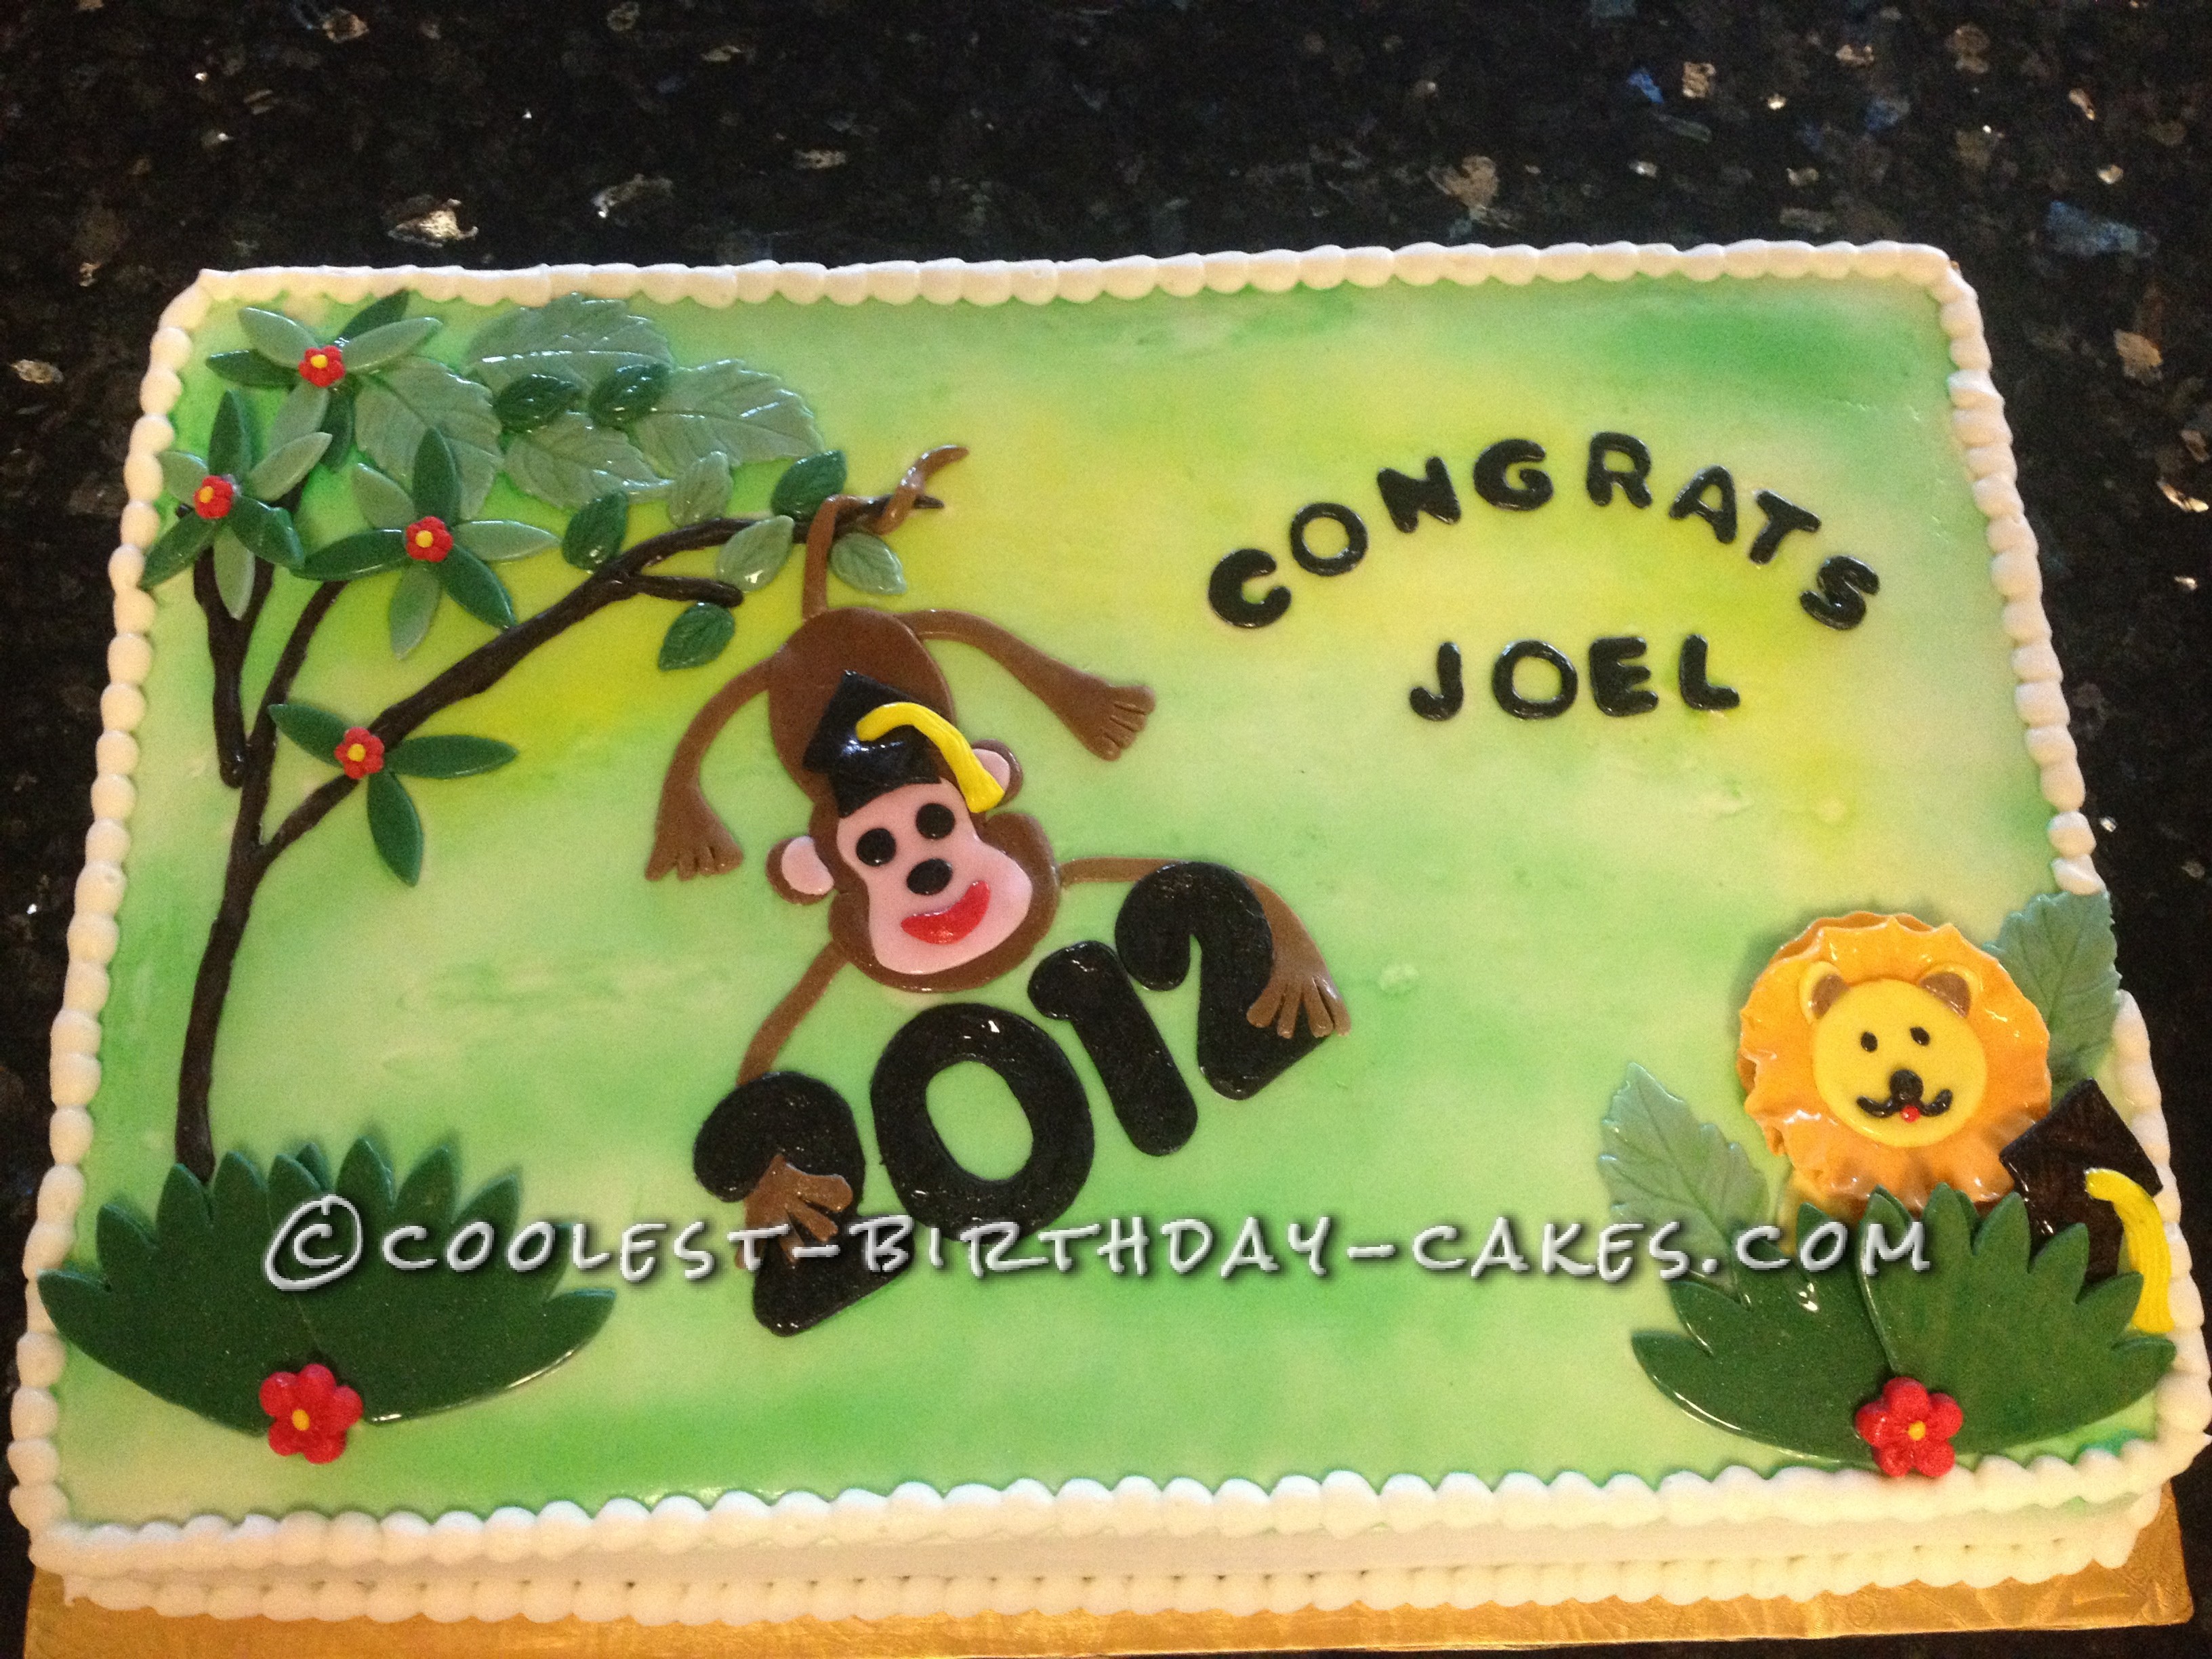 Cool Zoology-Themed Graduation Cake